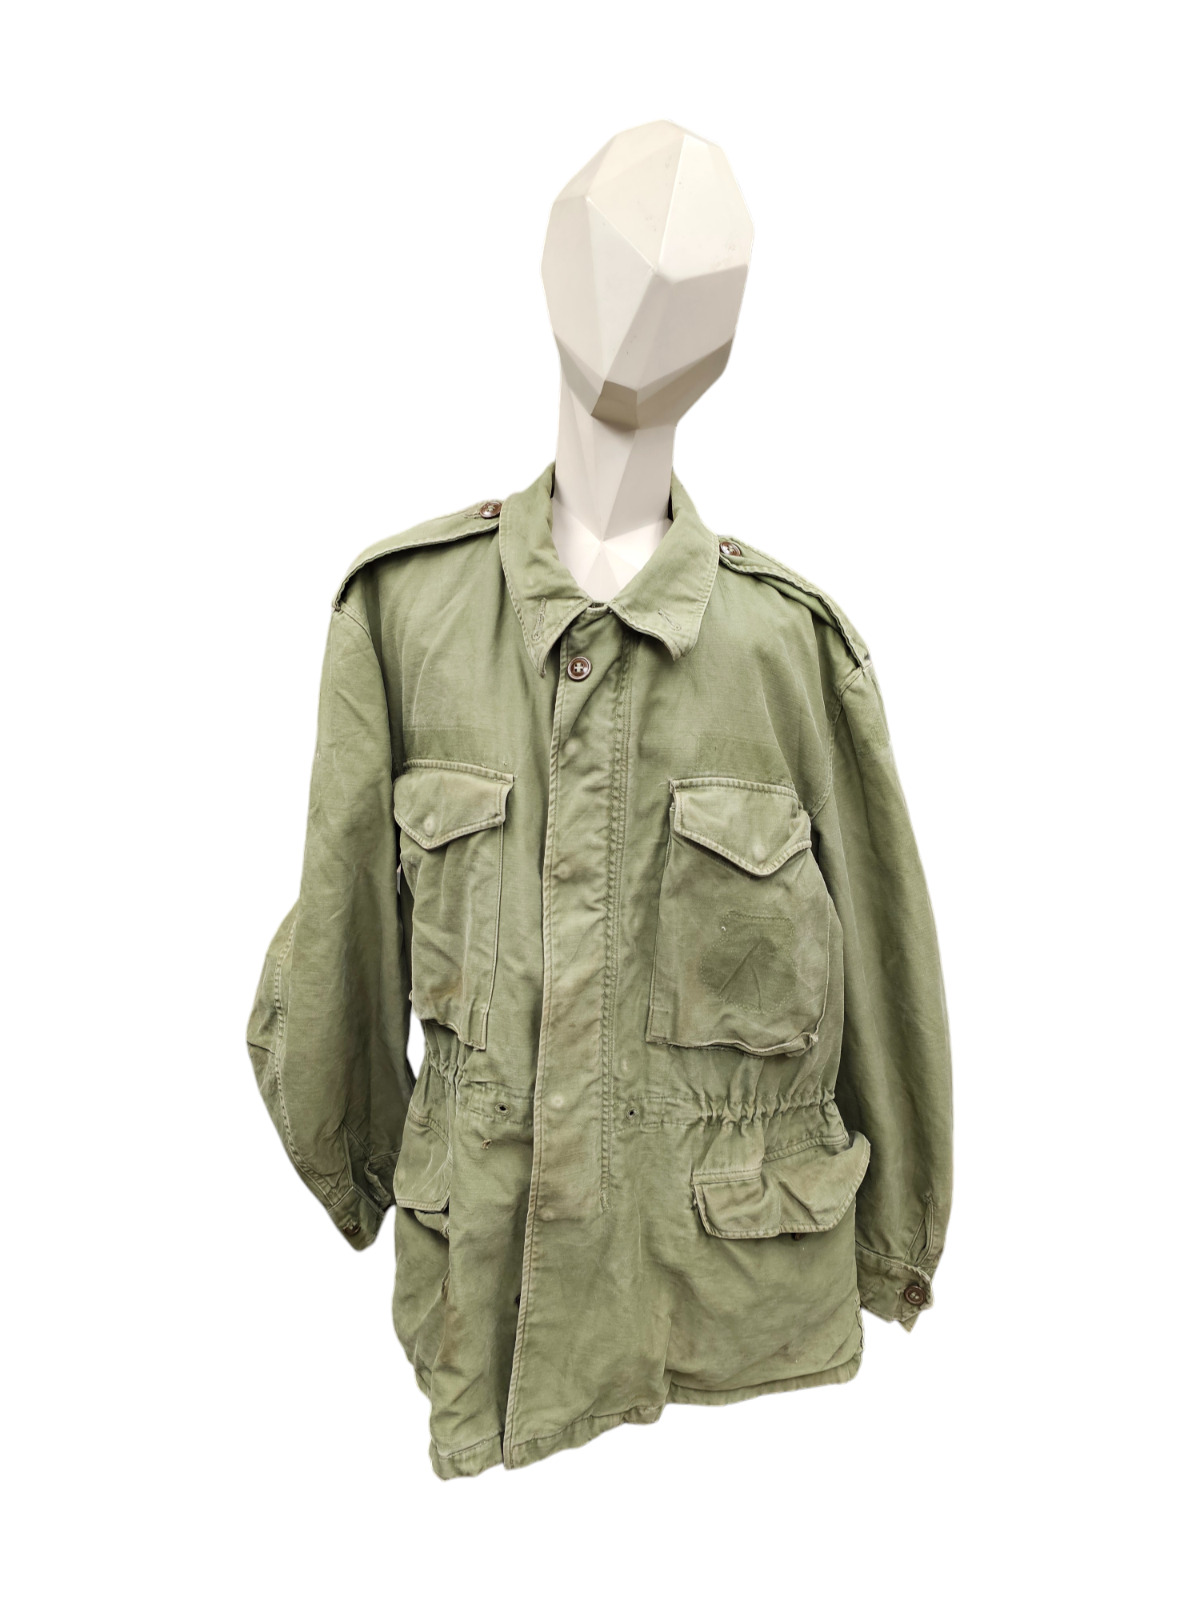 Vintage U.S. Armed Forces M51 OD Field Jacket